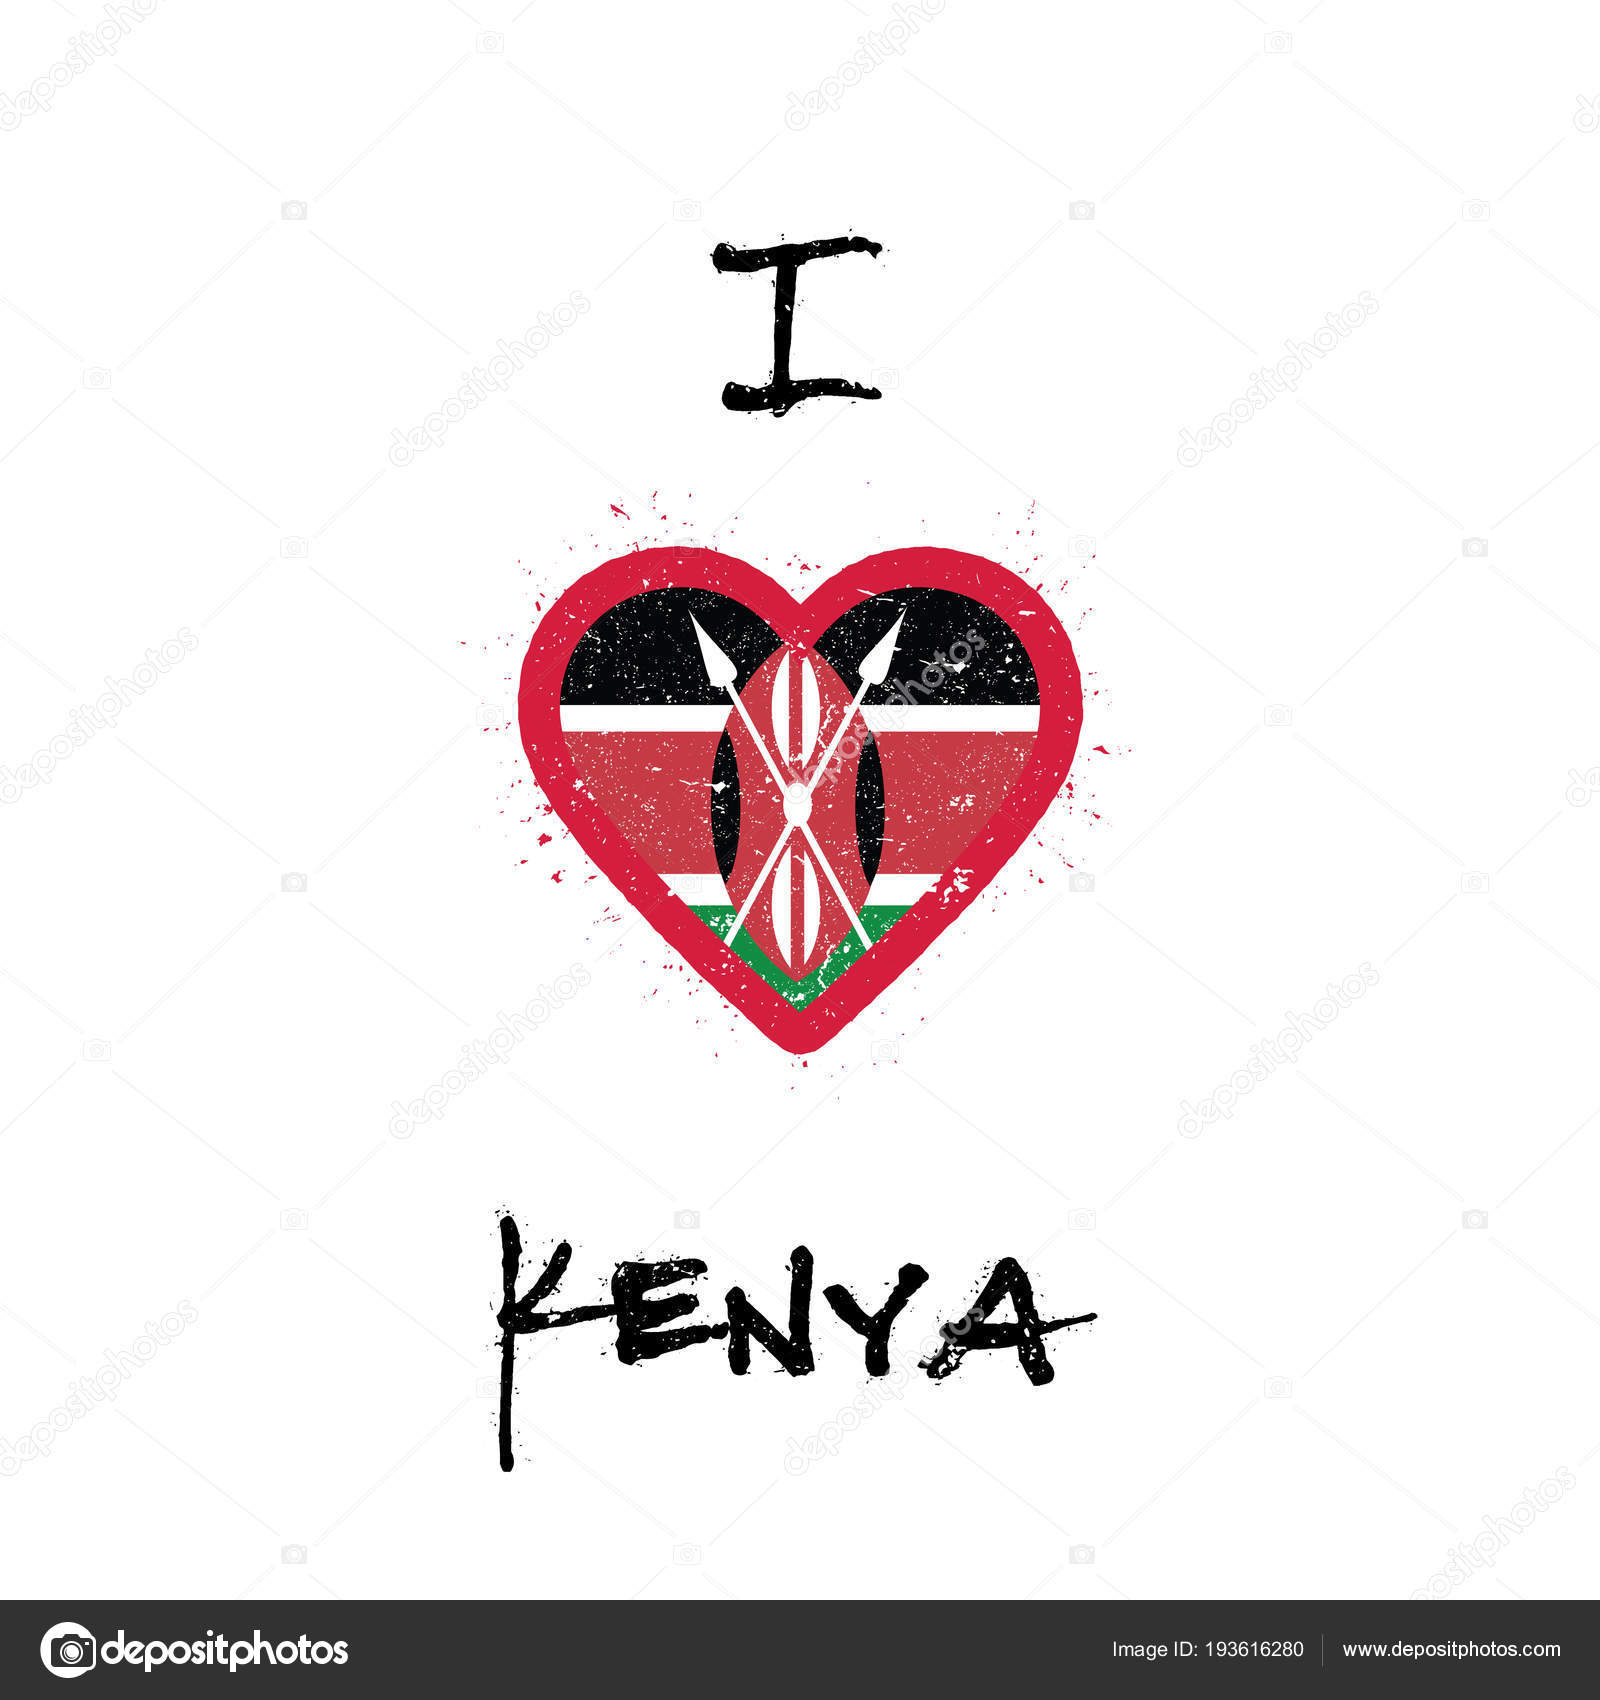 I Love Heart Kenya T-Shirt